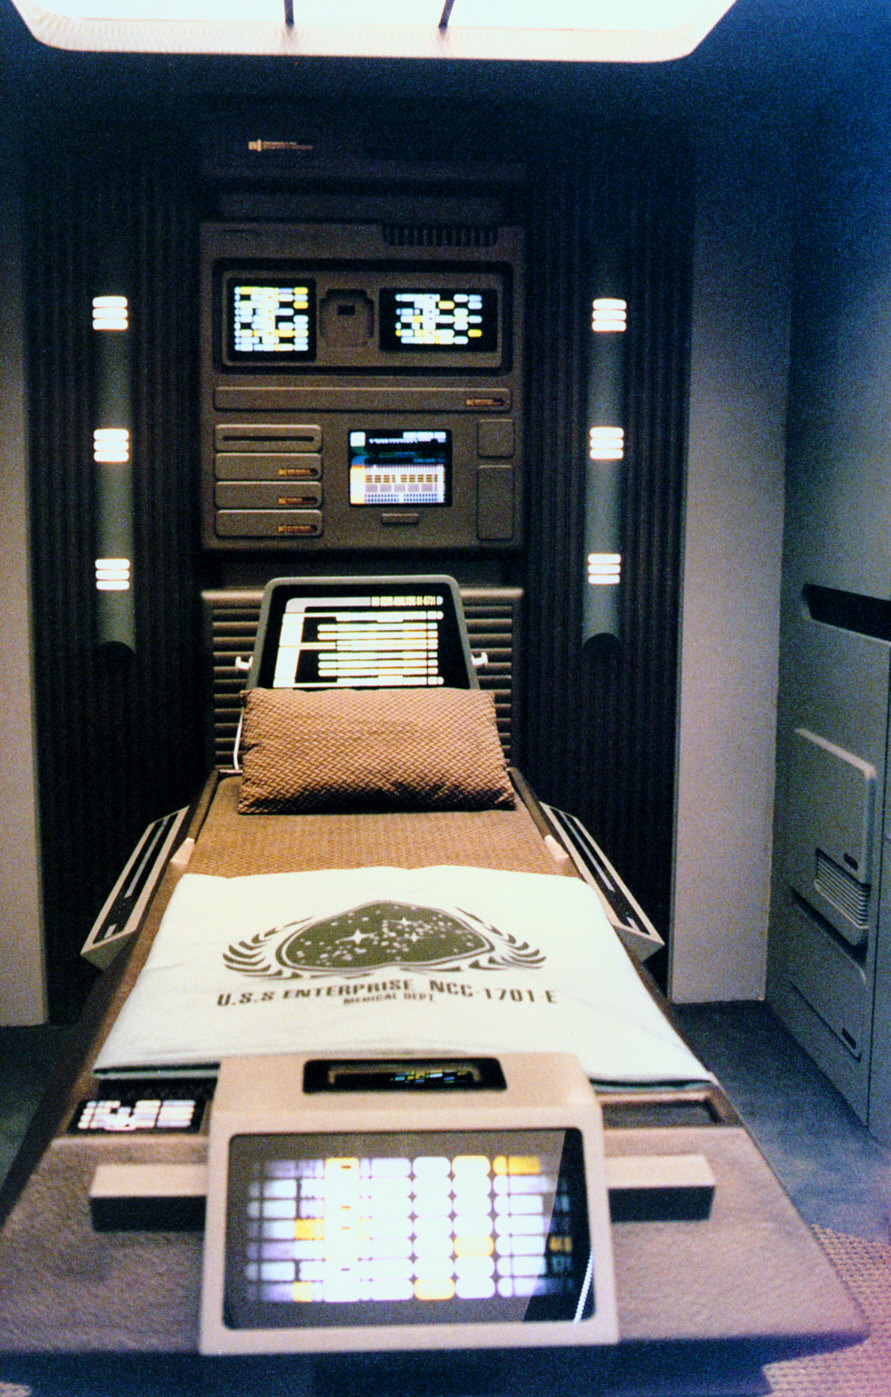 Ex Astris Scientia Galleries Other Starfleet Ship Interiors